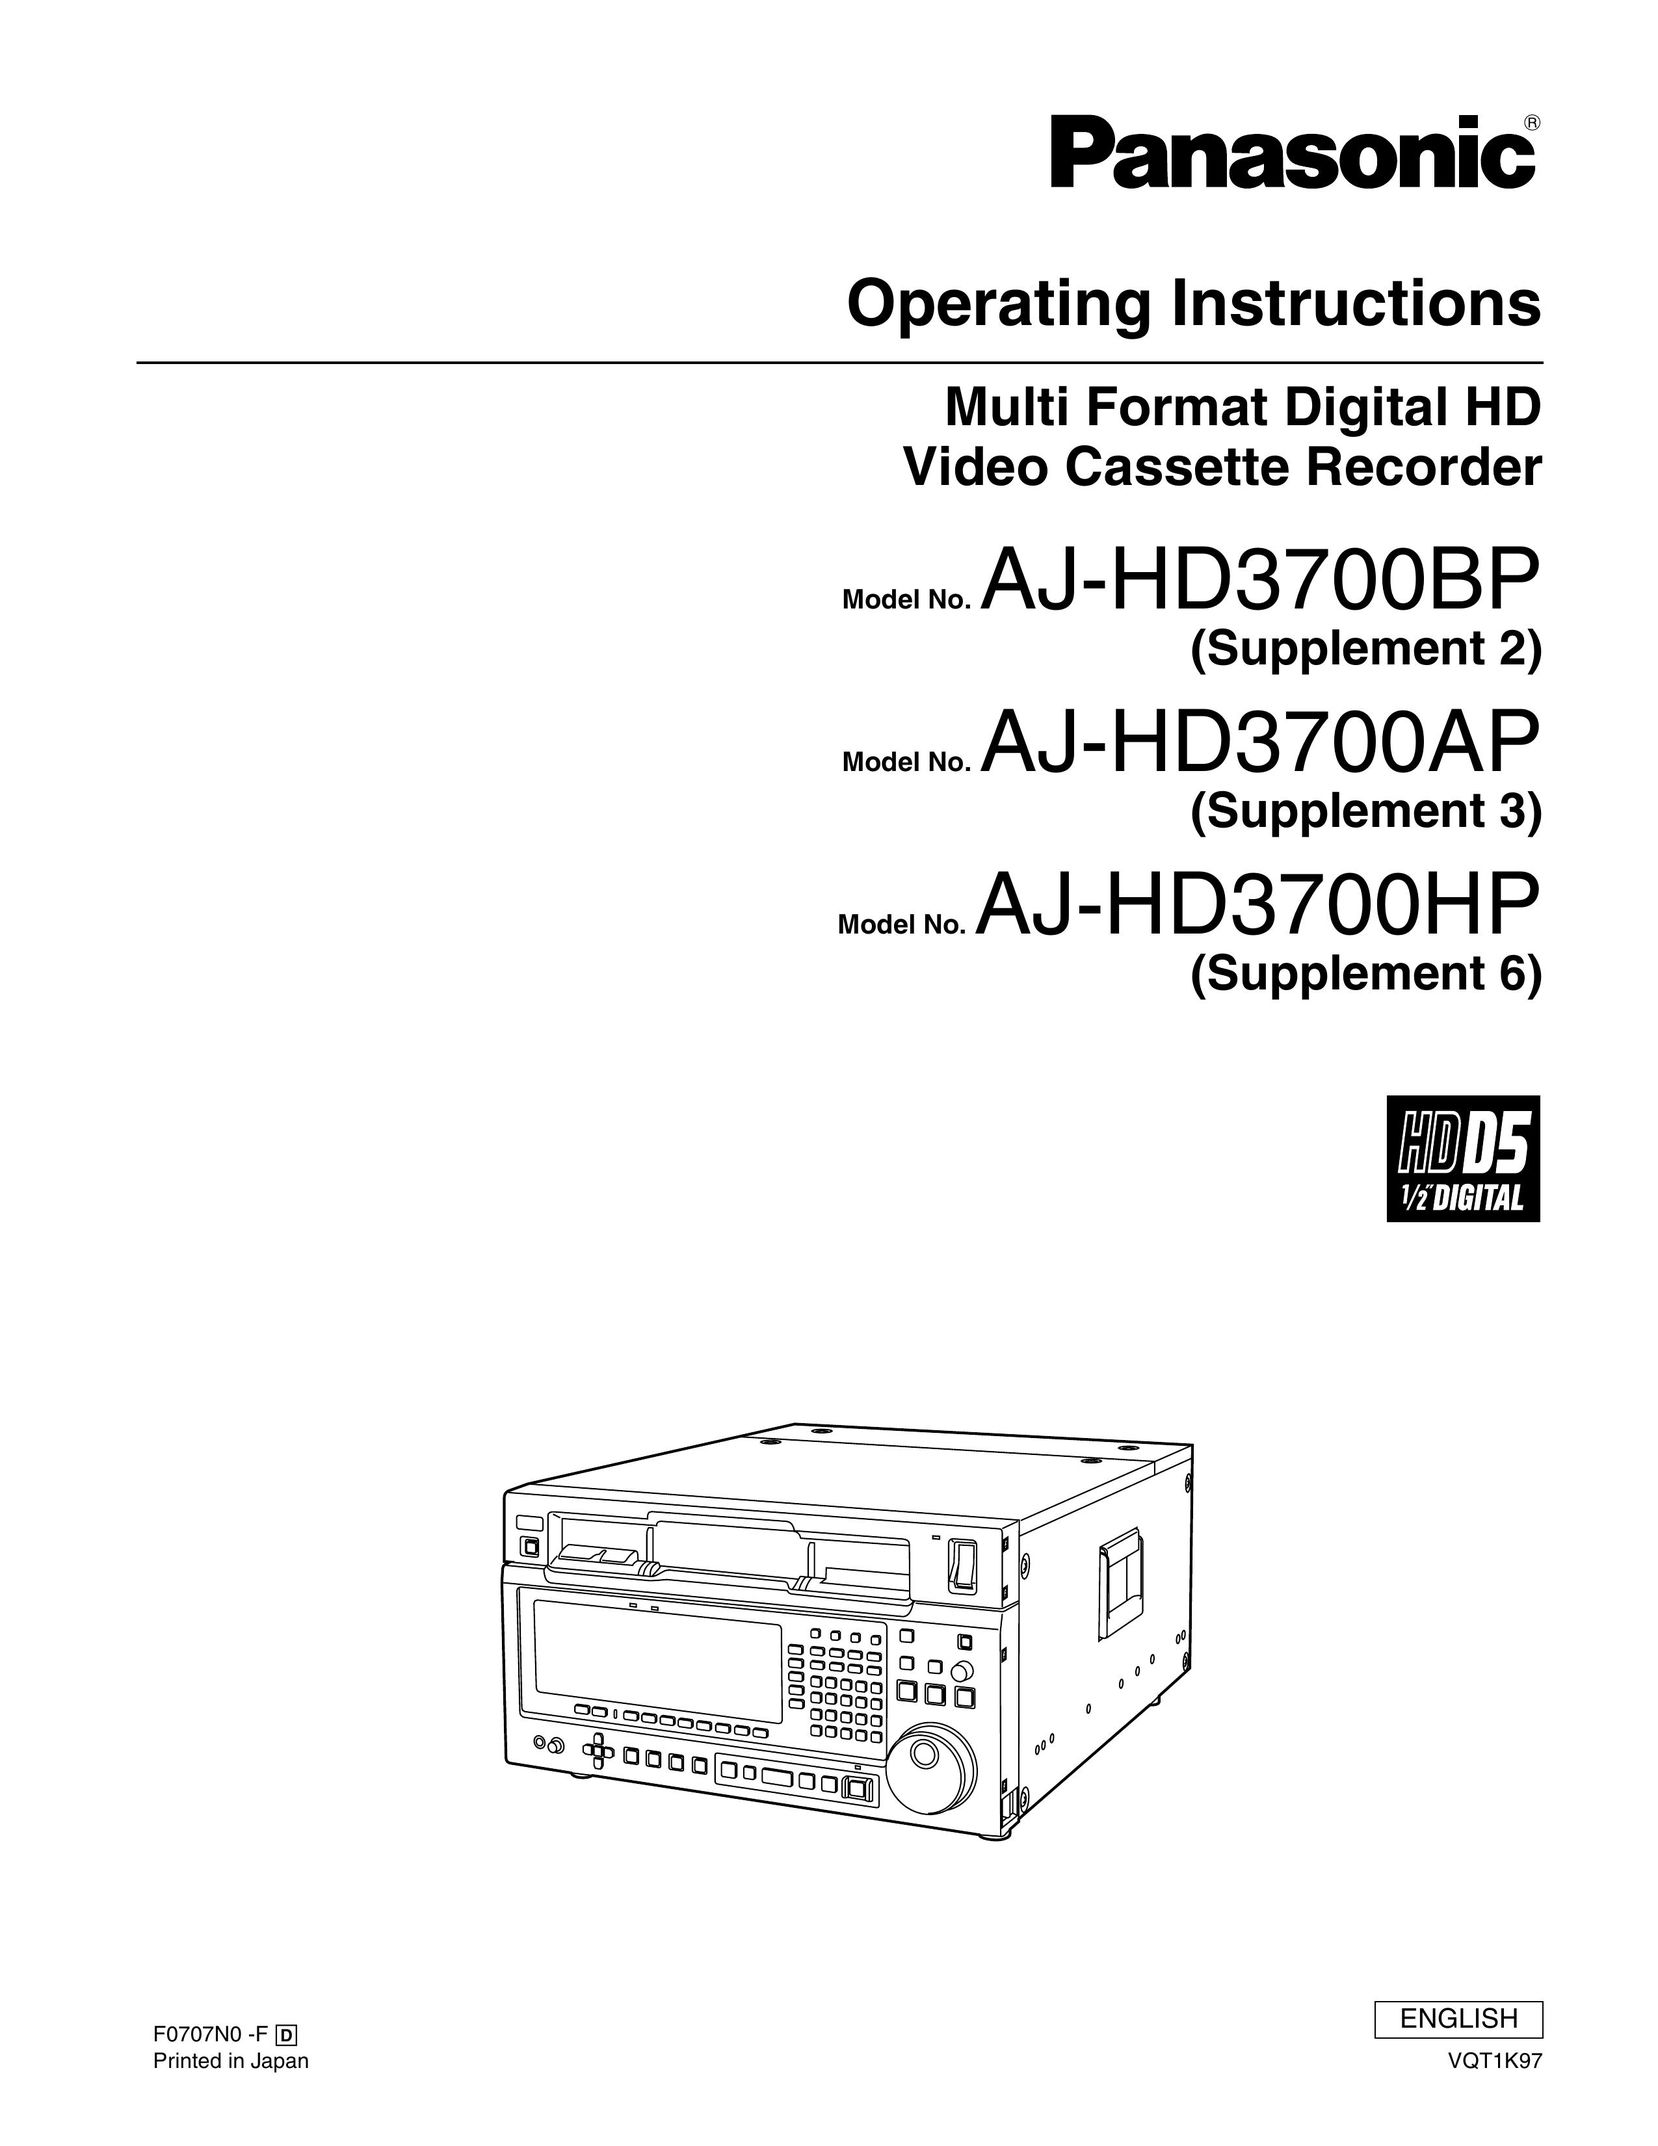 Panasonic AJ-HD3700AP VCR User Manual